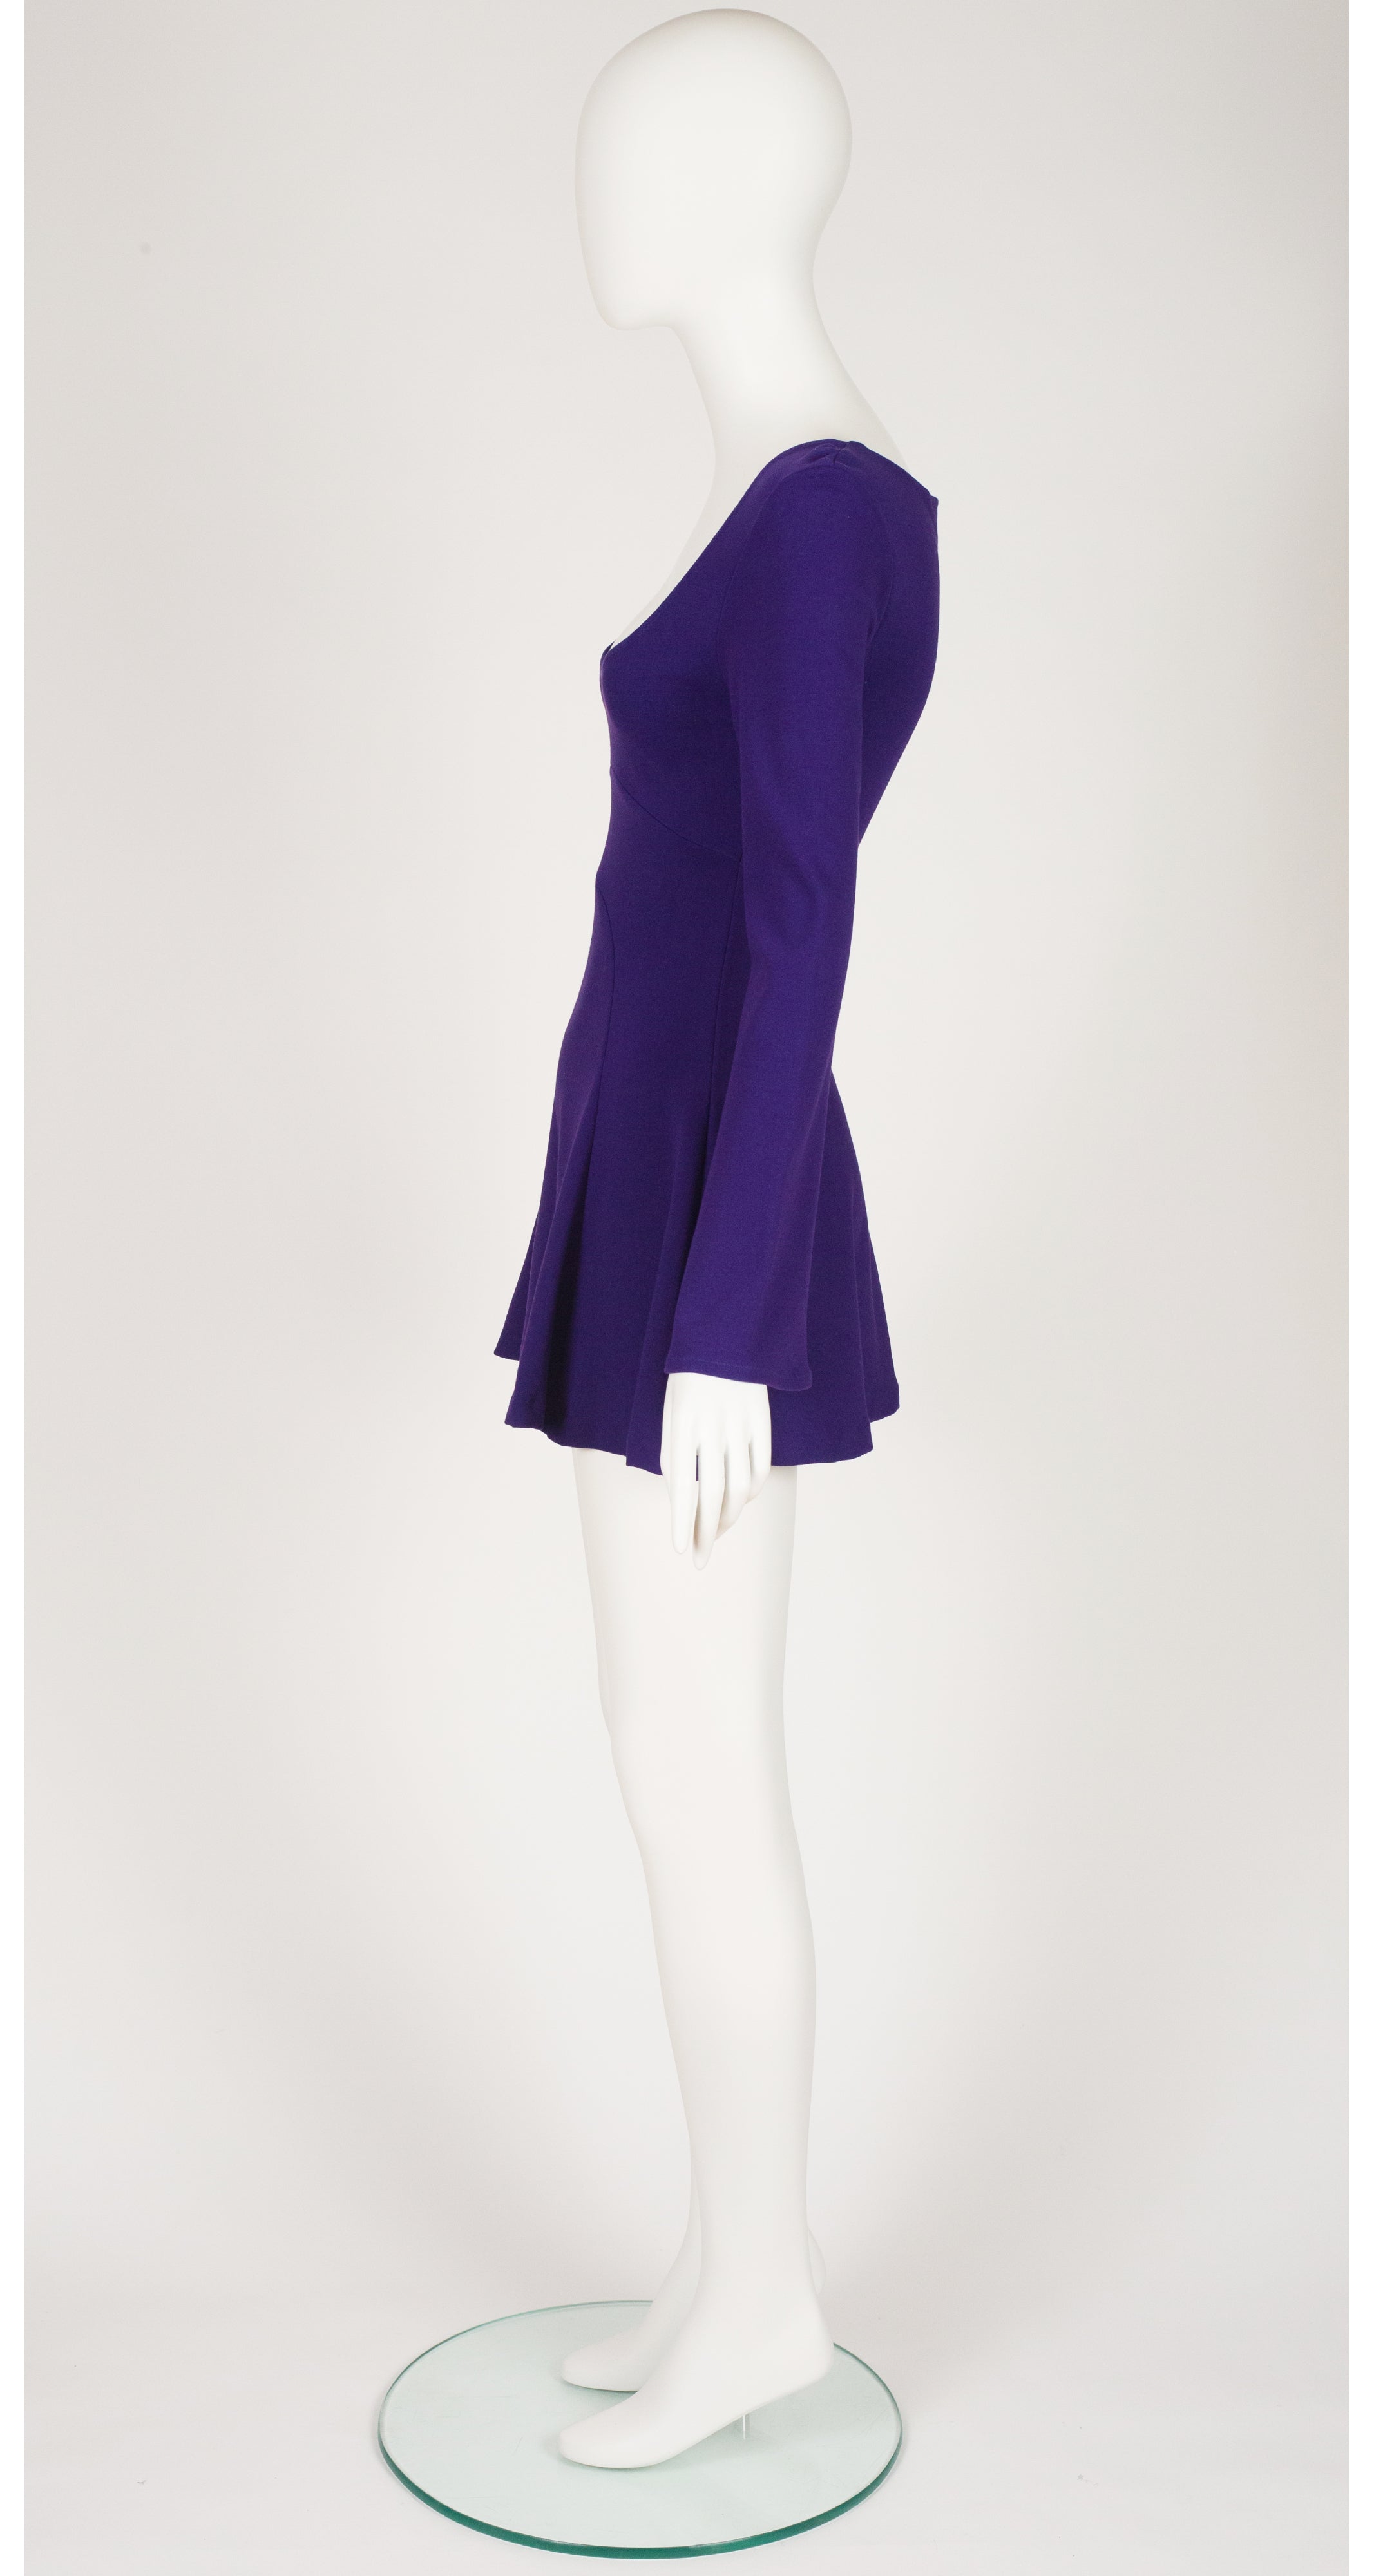 1990s-does-1960s Mod Purple Rayon Jersey Mini Dress